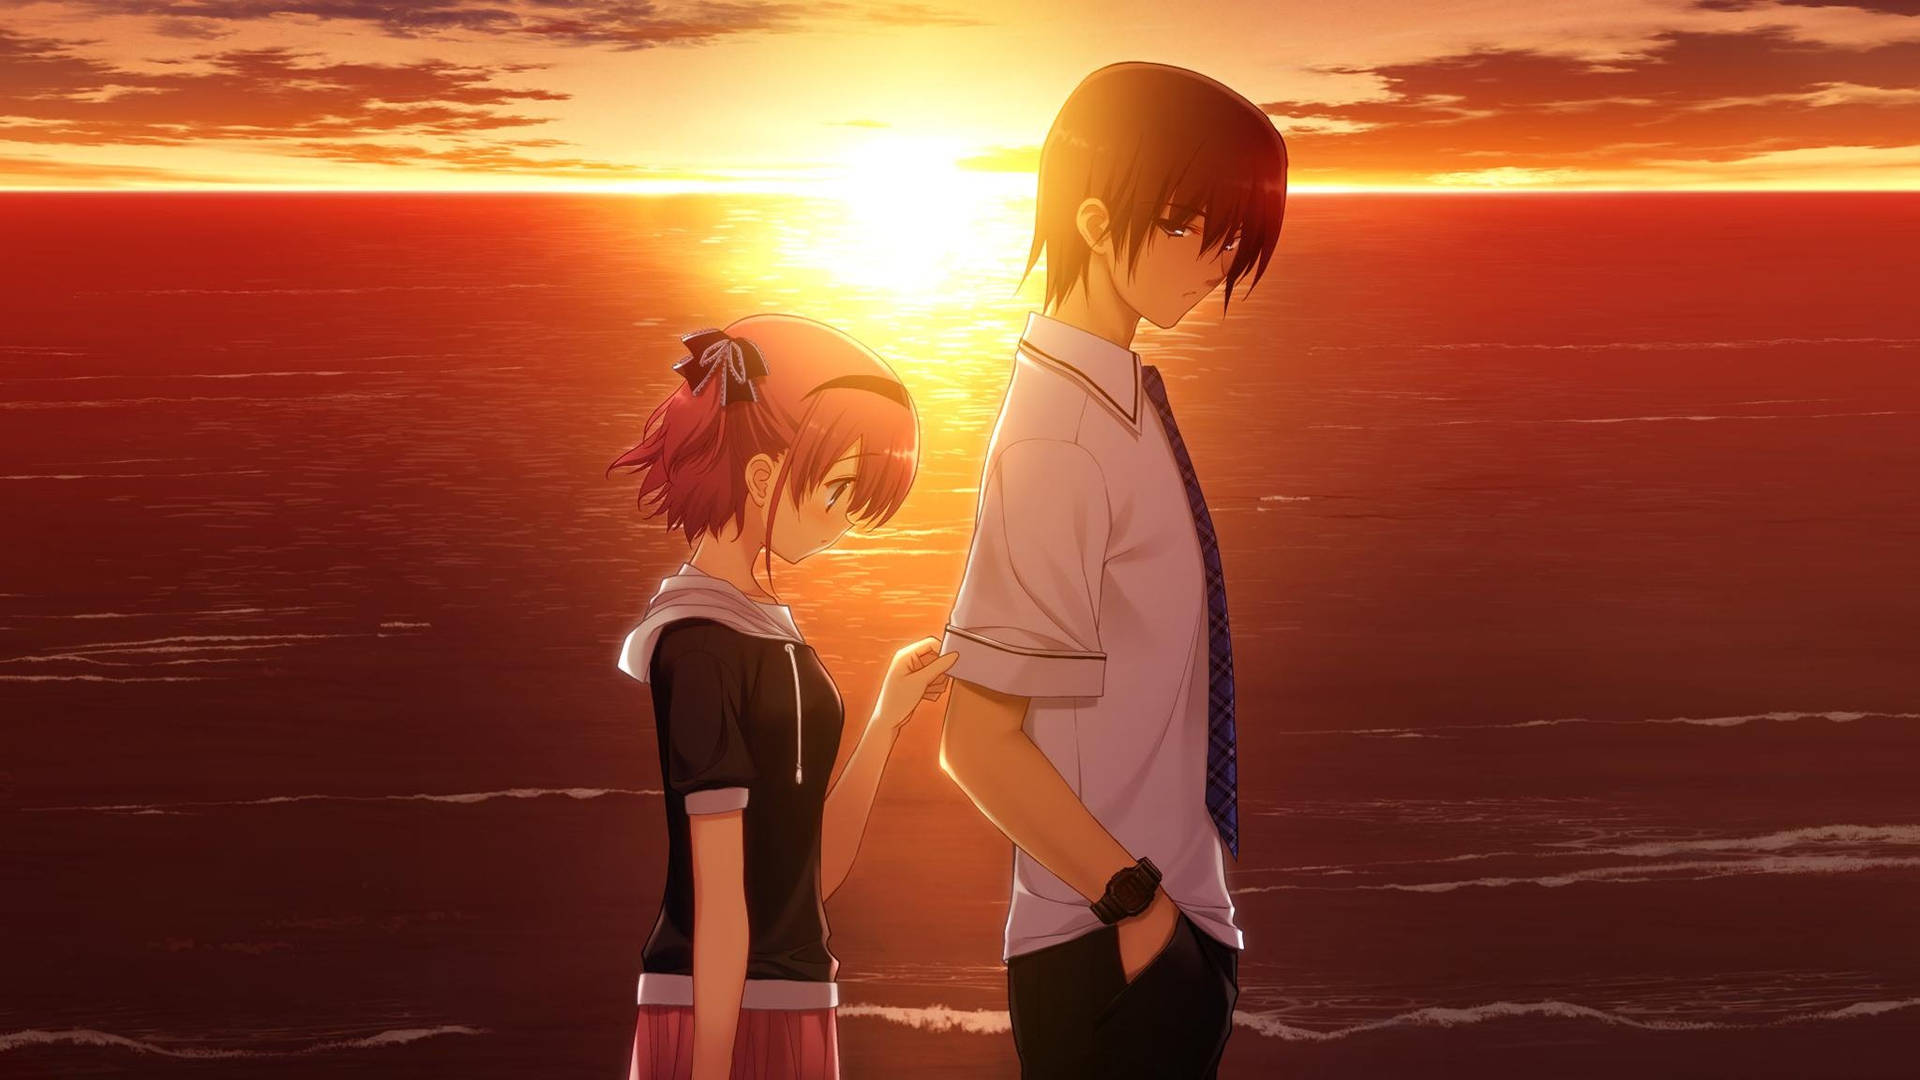 Download Sad Anime Sunset Couple Wallpaper 